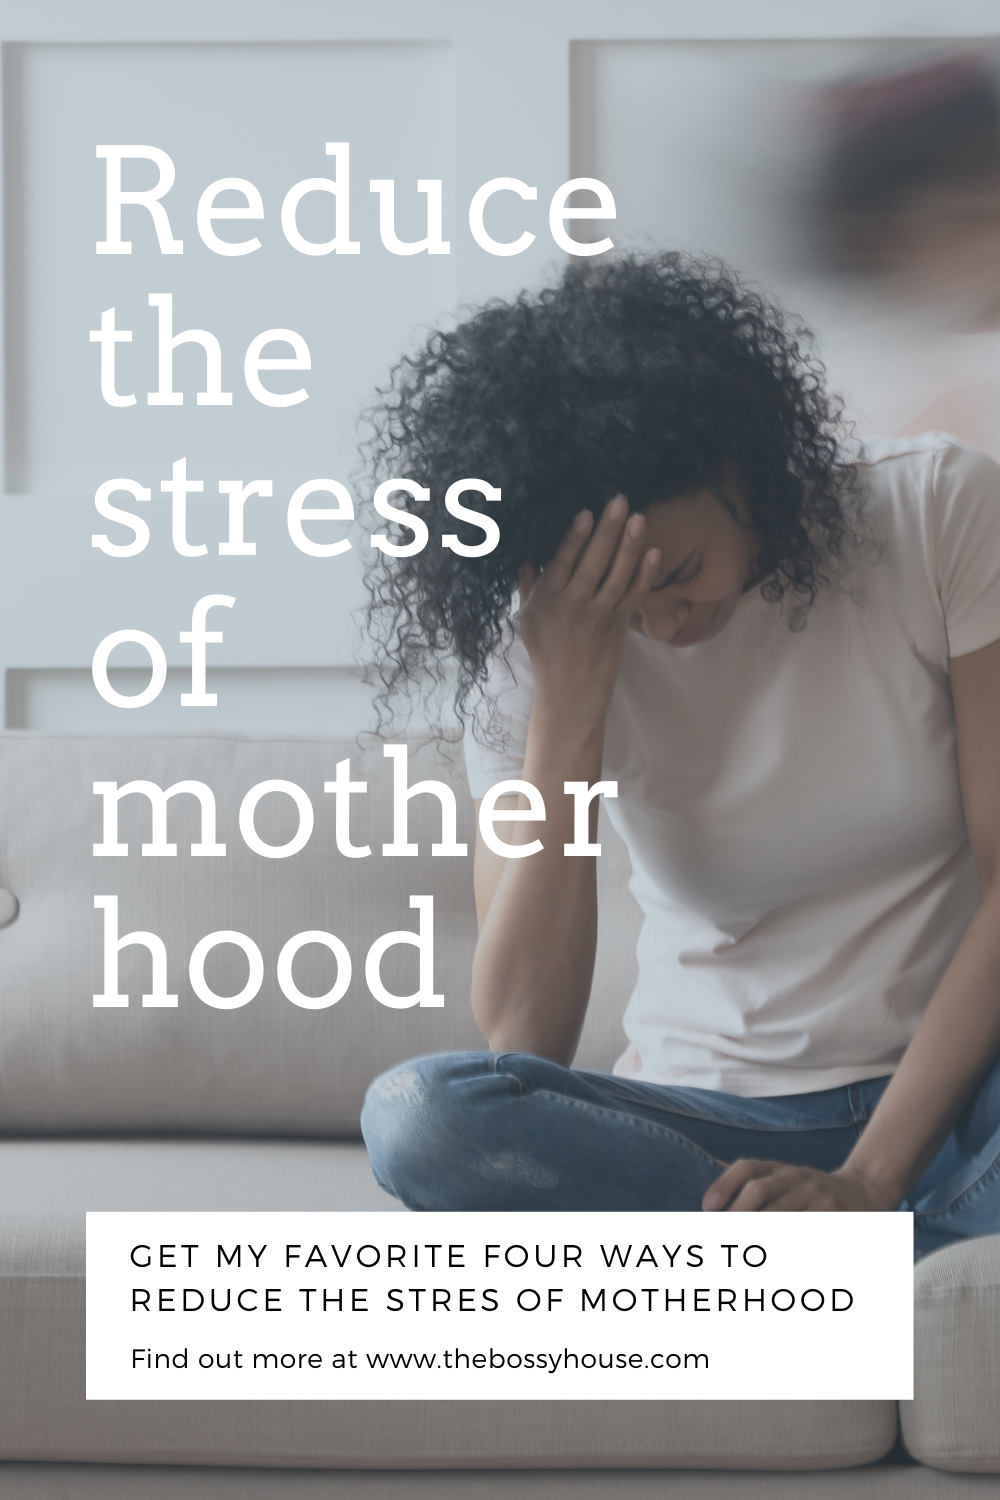 Reduce the stress of motherhood